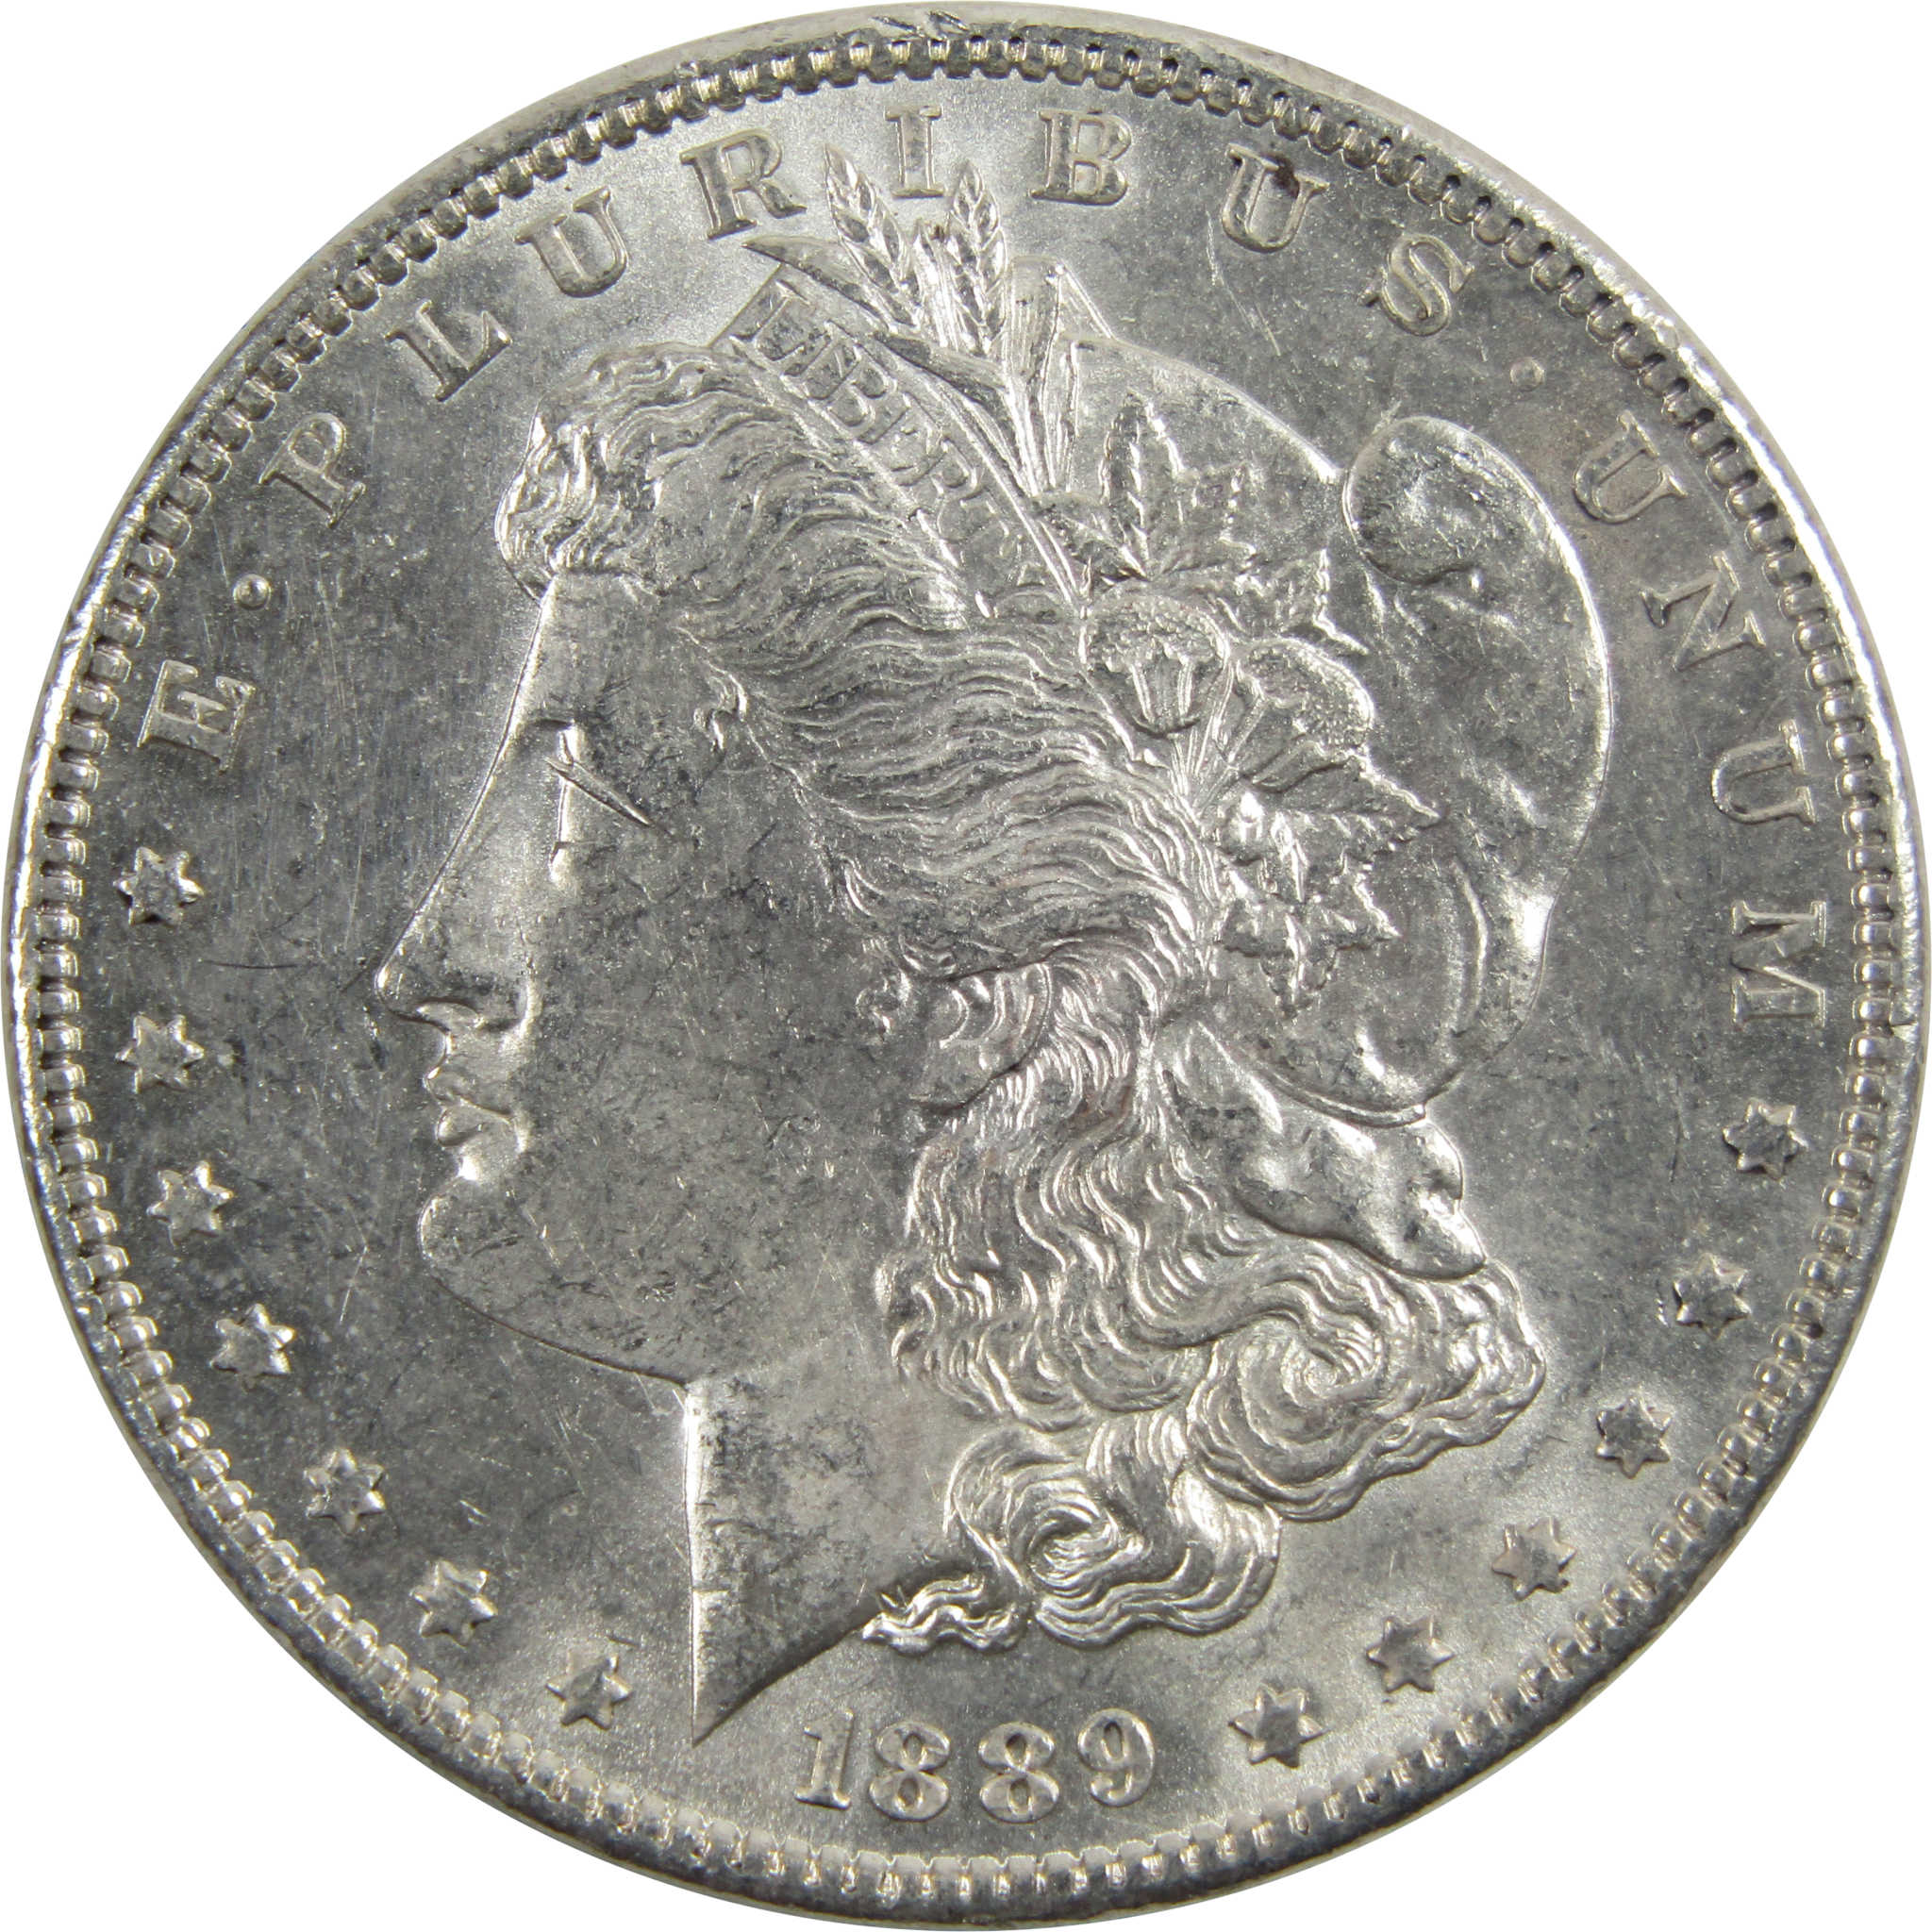 1889 Barwing Morgan Dollar Borderline Uncirculated Silver $1 SKU:I5616 - Morgan coin - Morgan silver dollar - Morgan silver dollar for sale - Profile Coins &amp; Collectibles